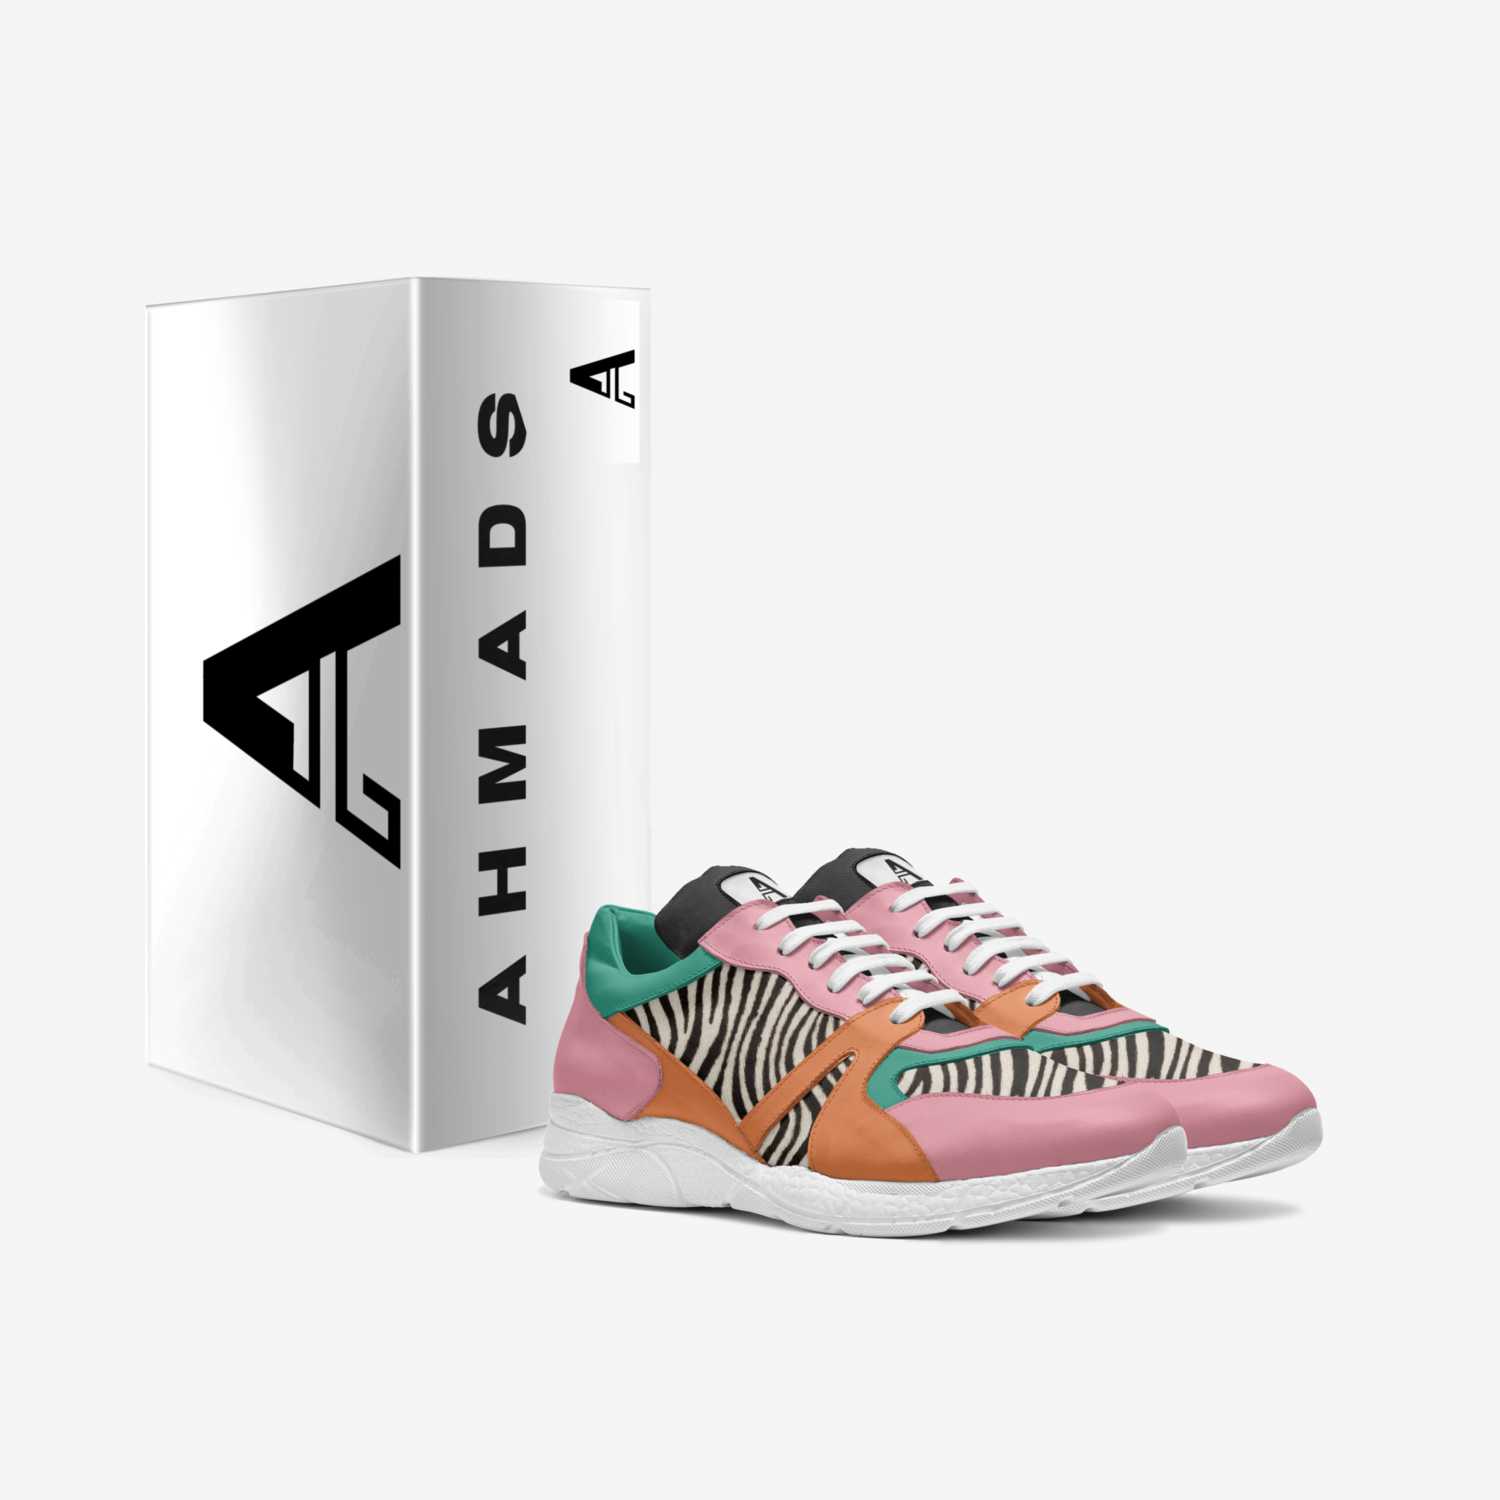 Ahmads  custom made in Italy shoes by Brandon Ahmad | Box view